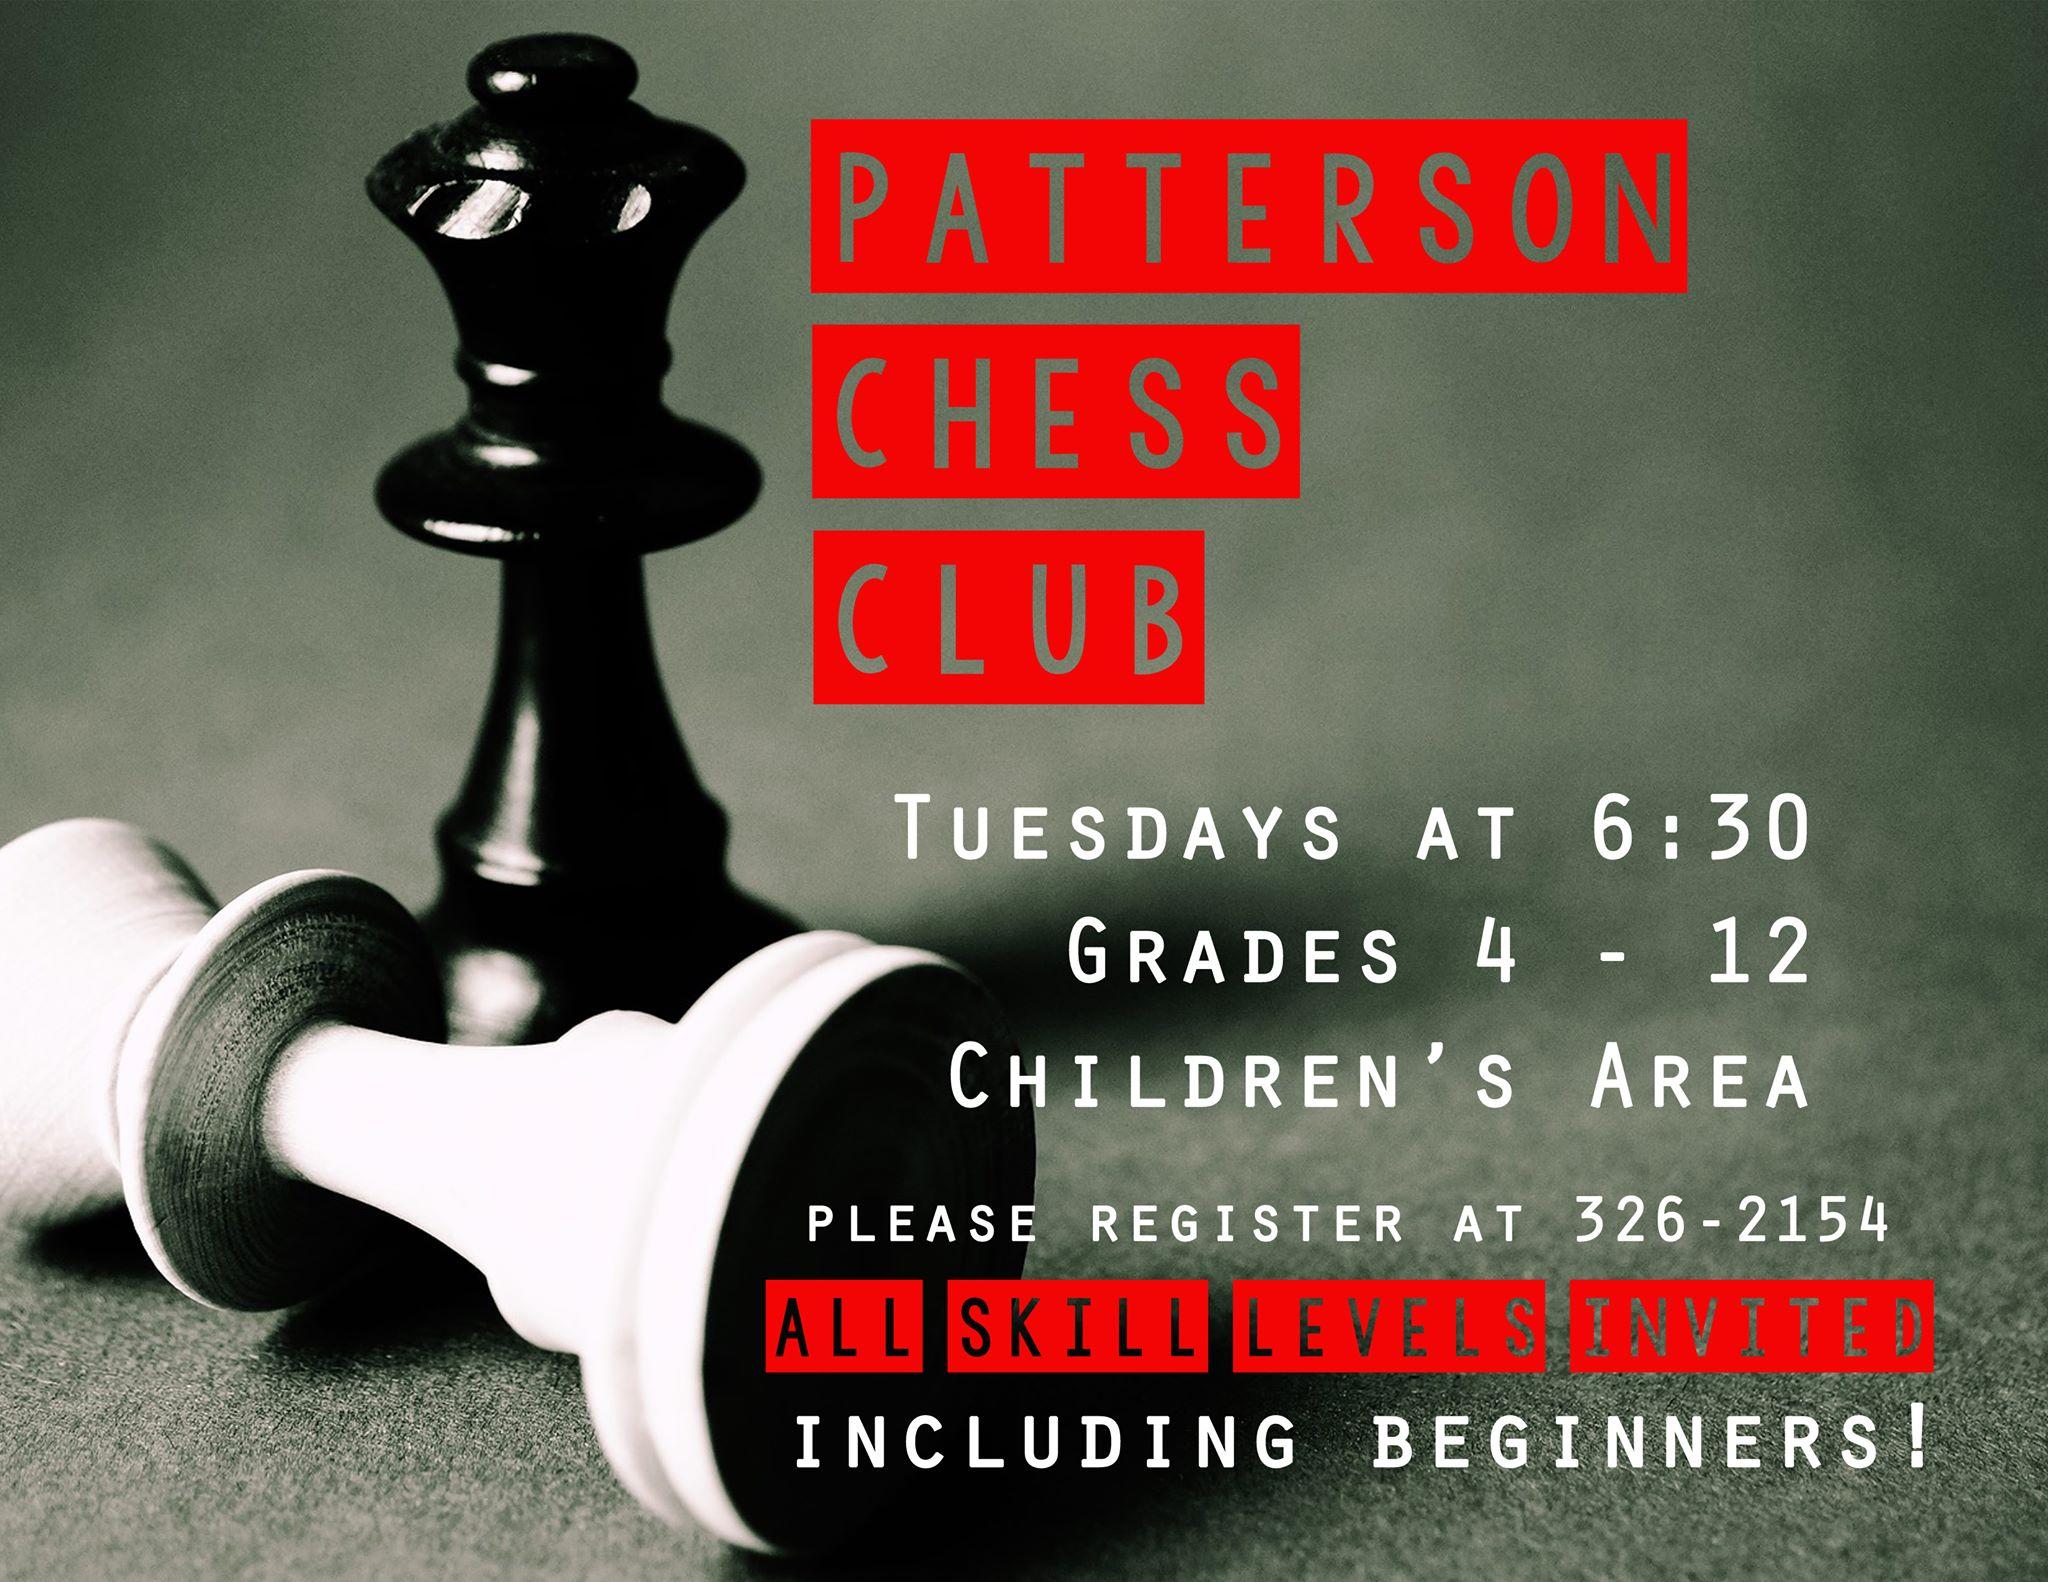 Patterson Junior Chess Club